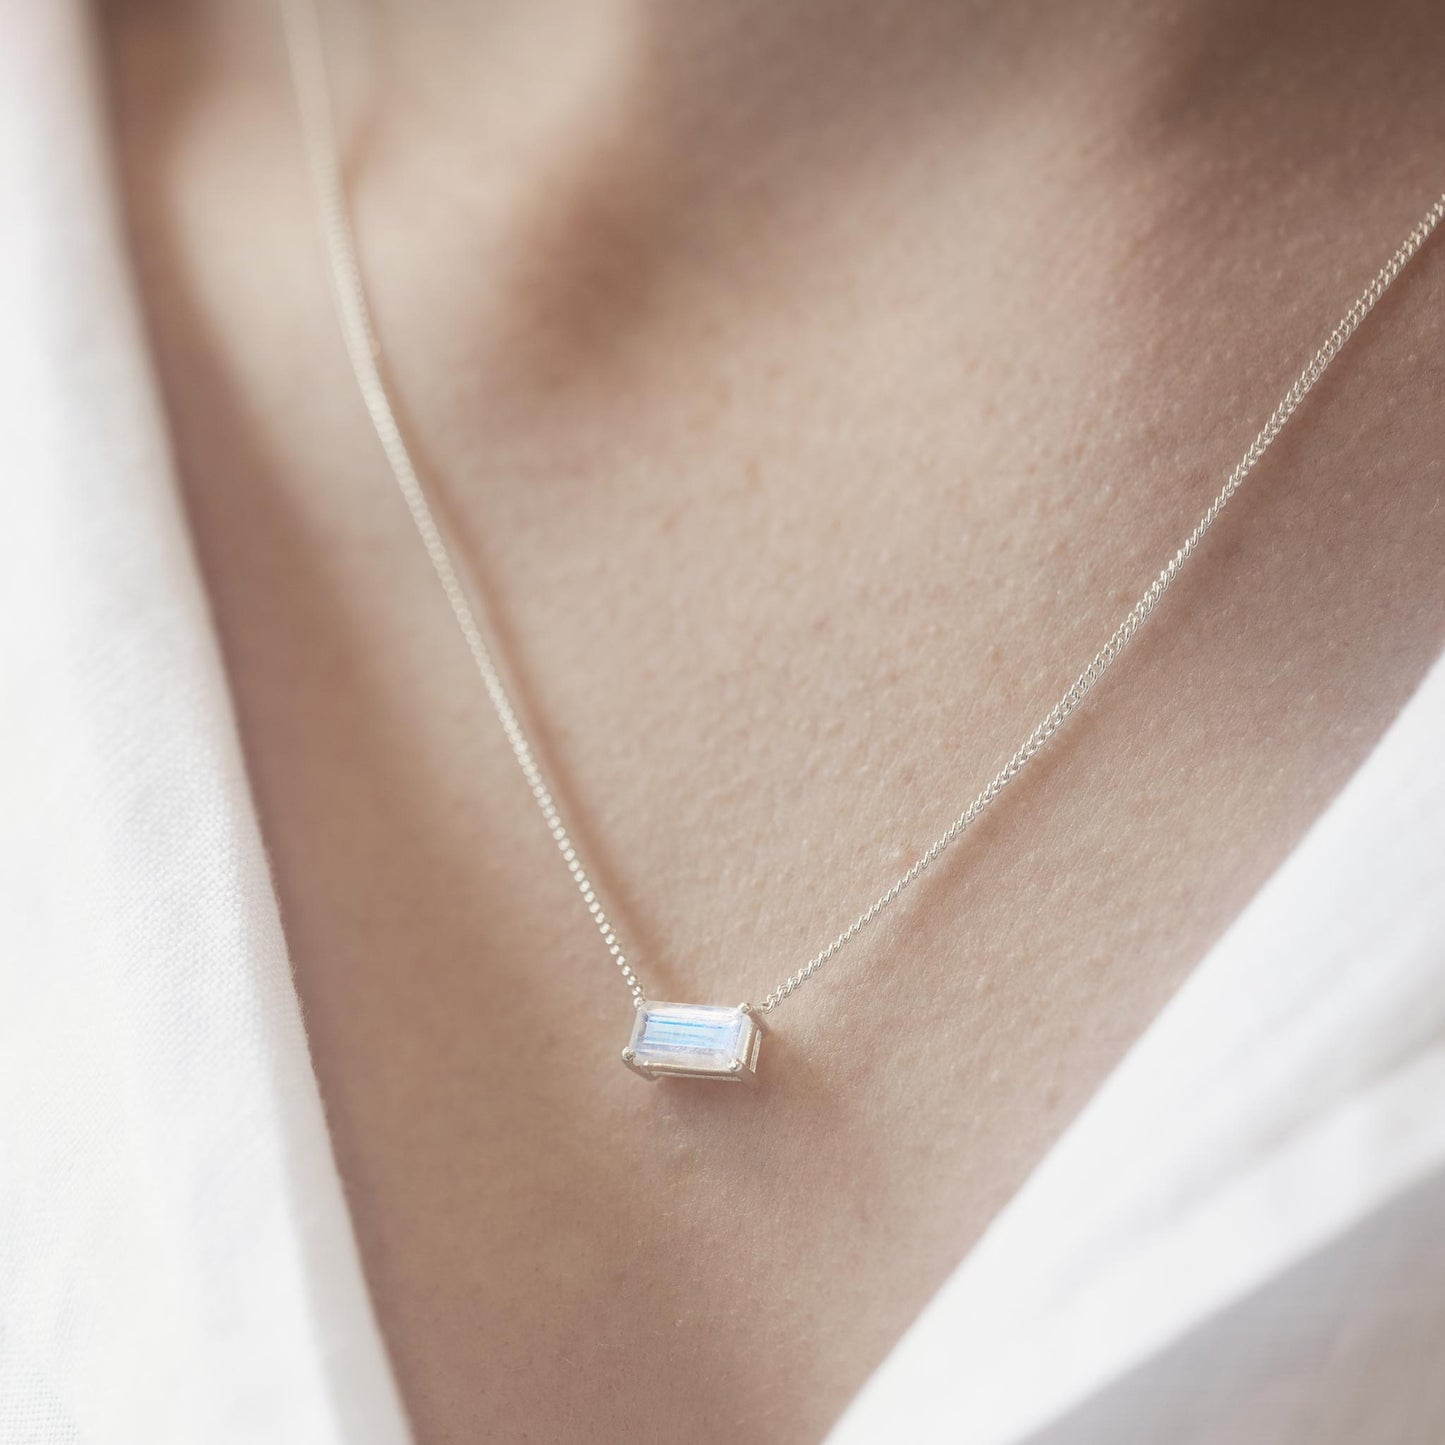 horizontal rainbow moonstone pendant necklace on model with white shirt